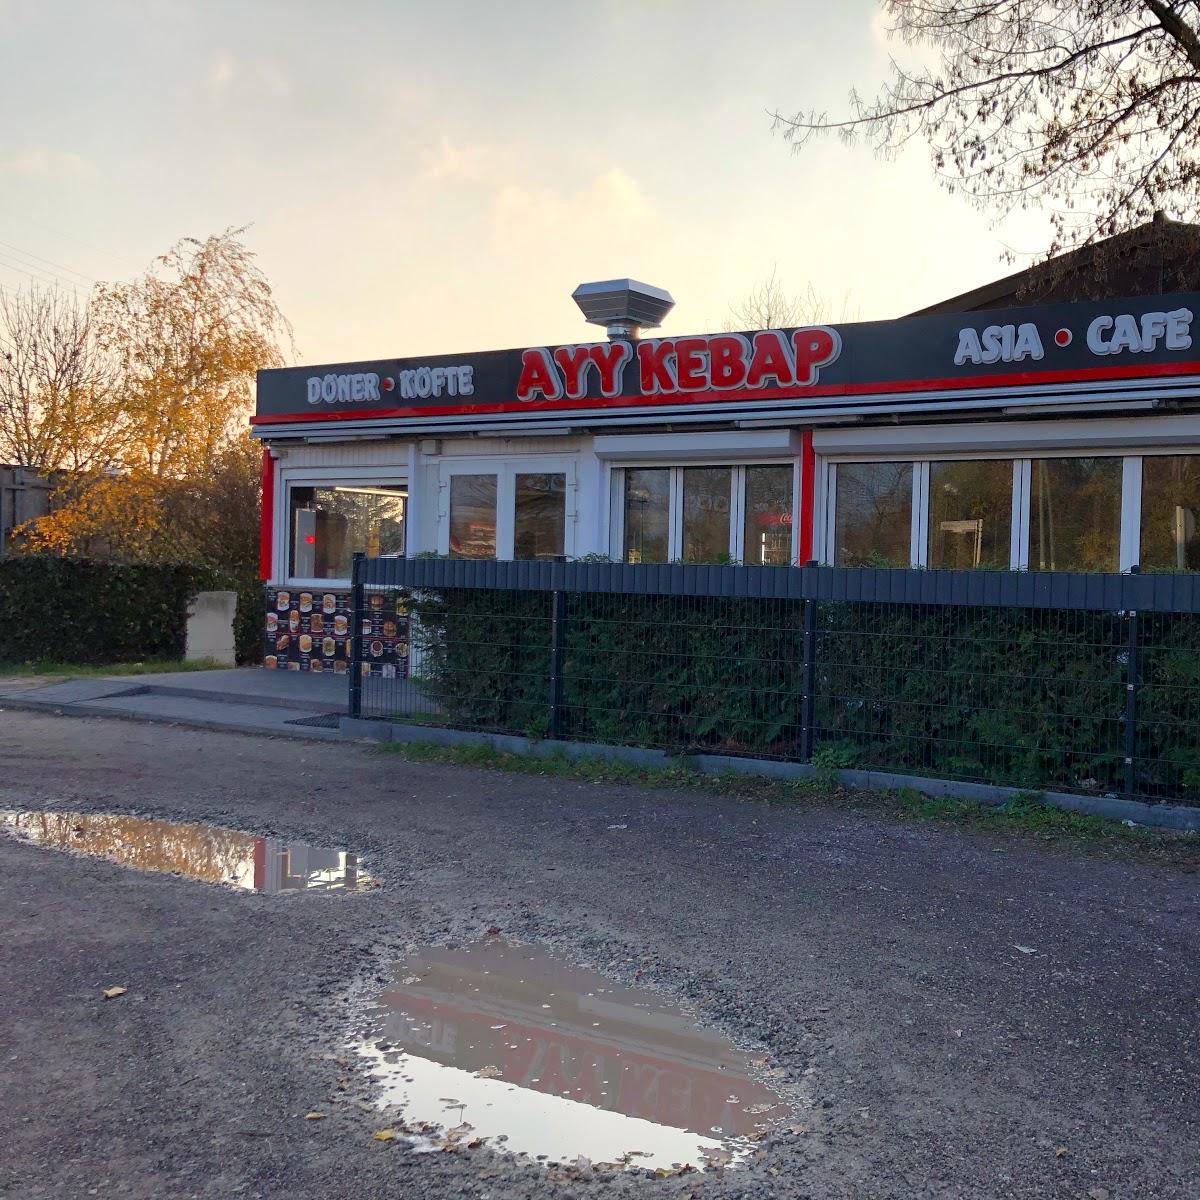 Restaurant "Ayy Kebap" in Berlin